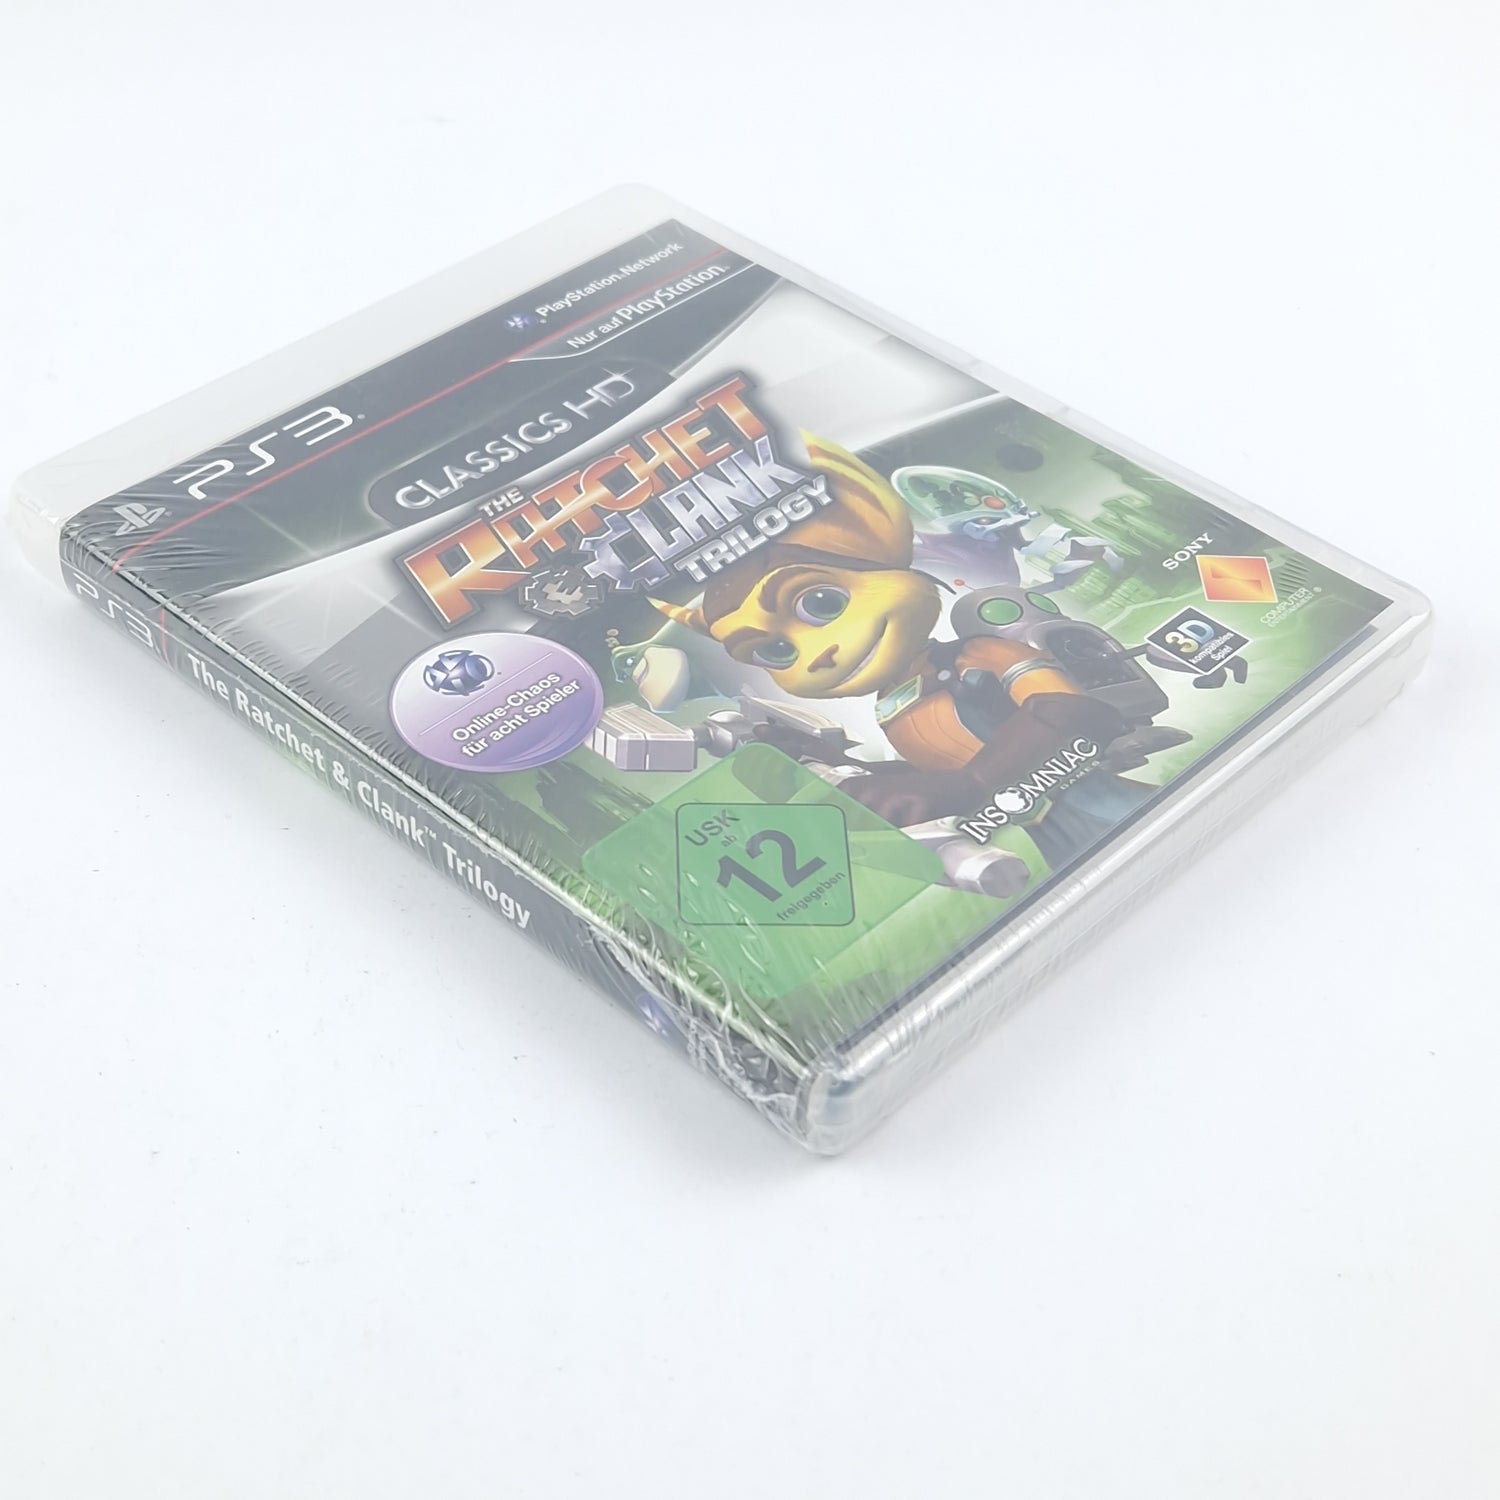 Playstation 3 Spiel : The Ratchet & Clank Trilogy - Sony PS3 - NEU RESEALED